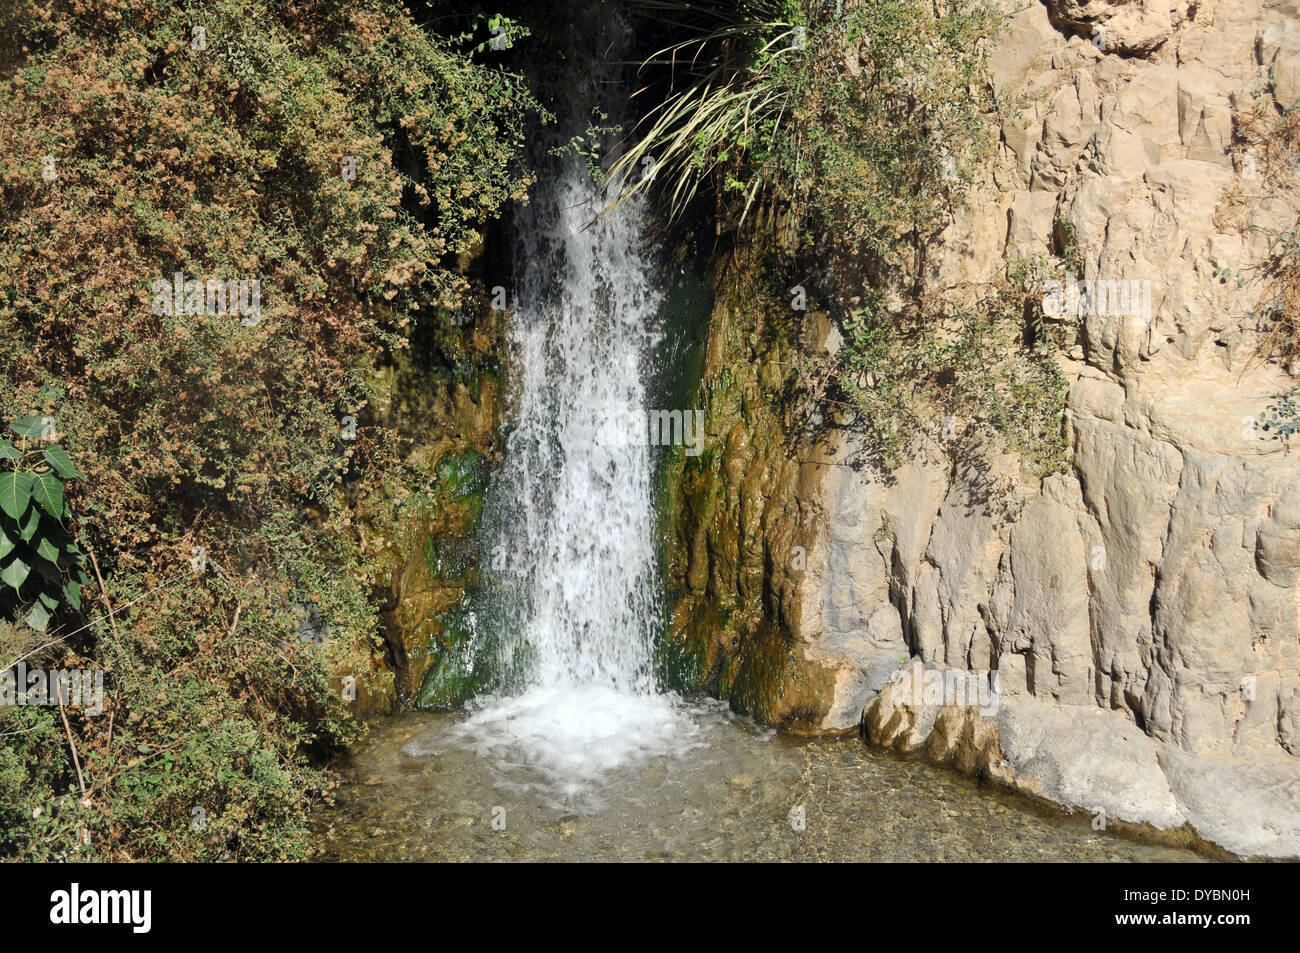 Cascata, Riserva Naturale di Ein Gedi e Parco Nazionale, Israele Foto stock  - Alamy